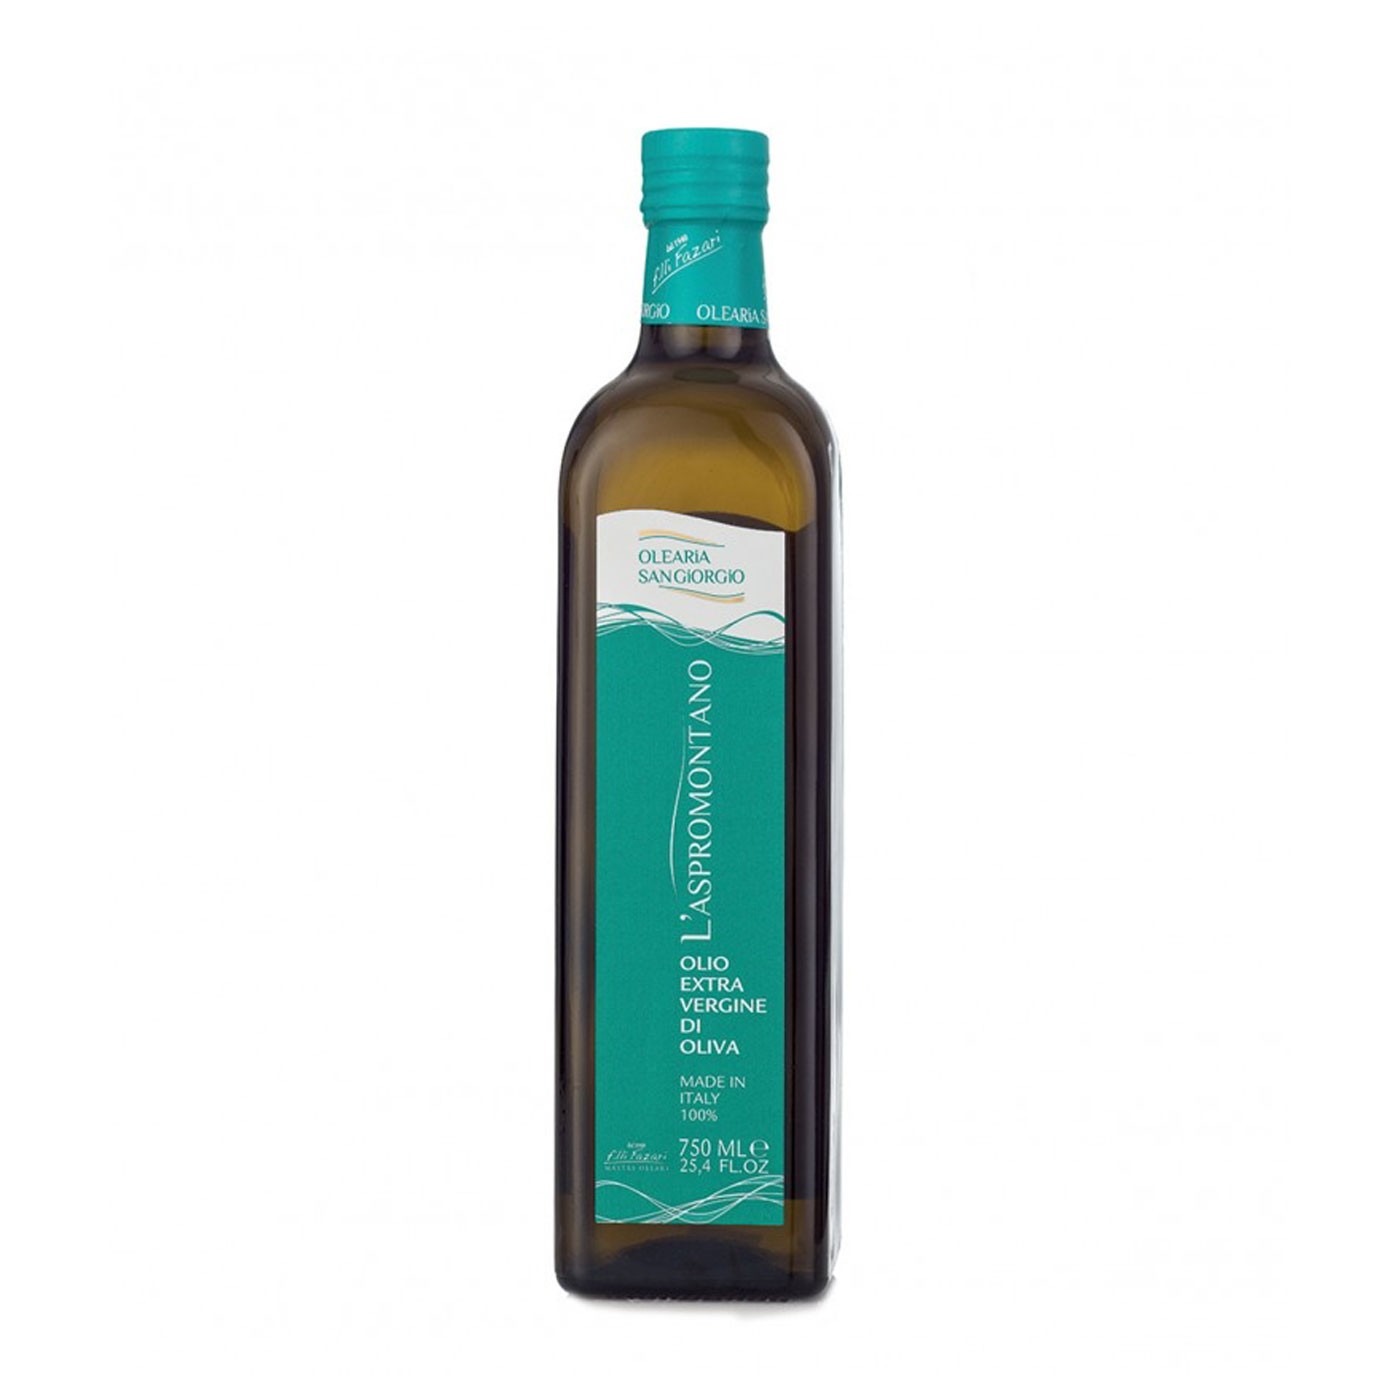 Aspromontano Extra Virgin Olive Oil 25.4 oz 